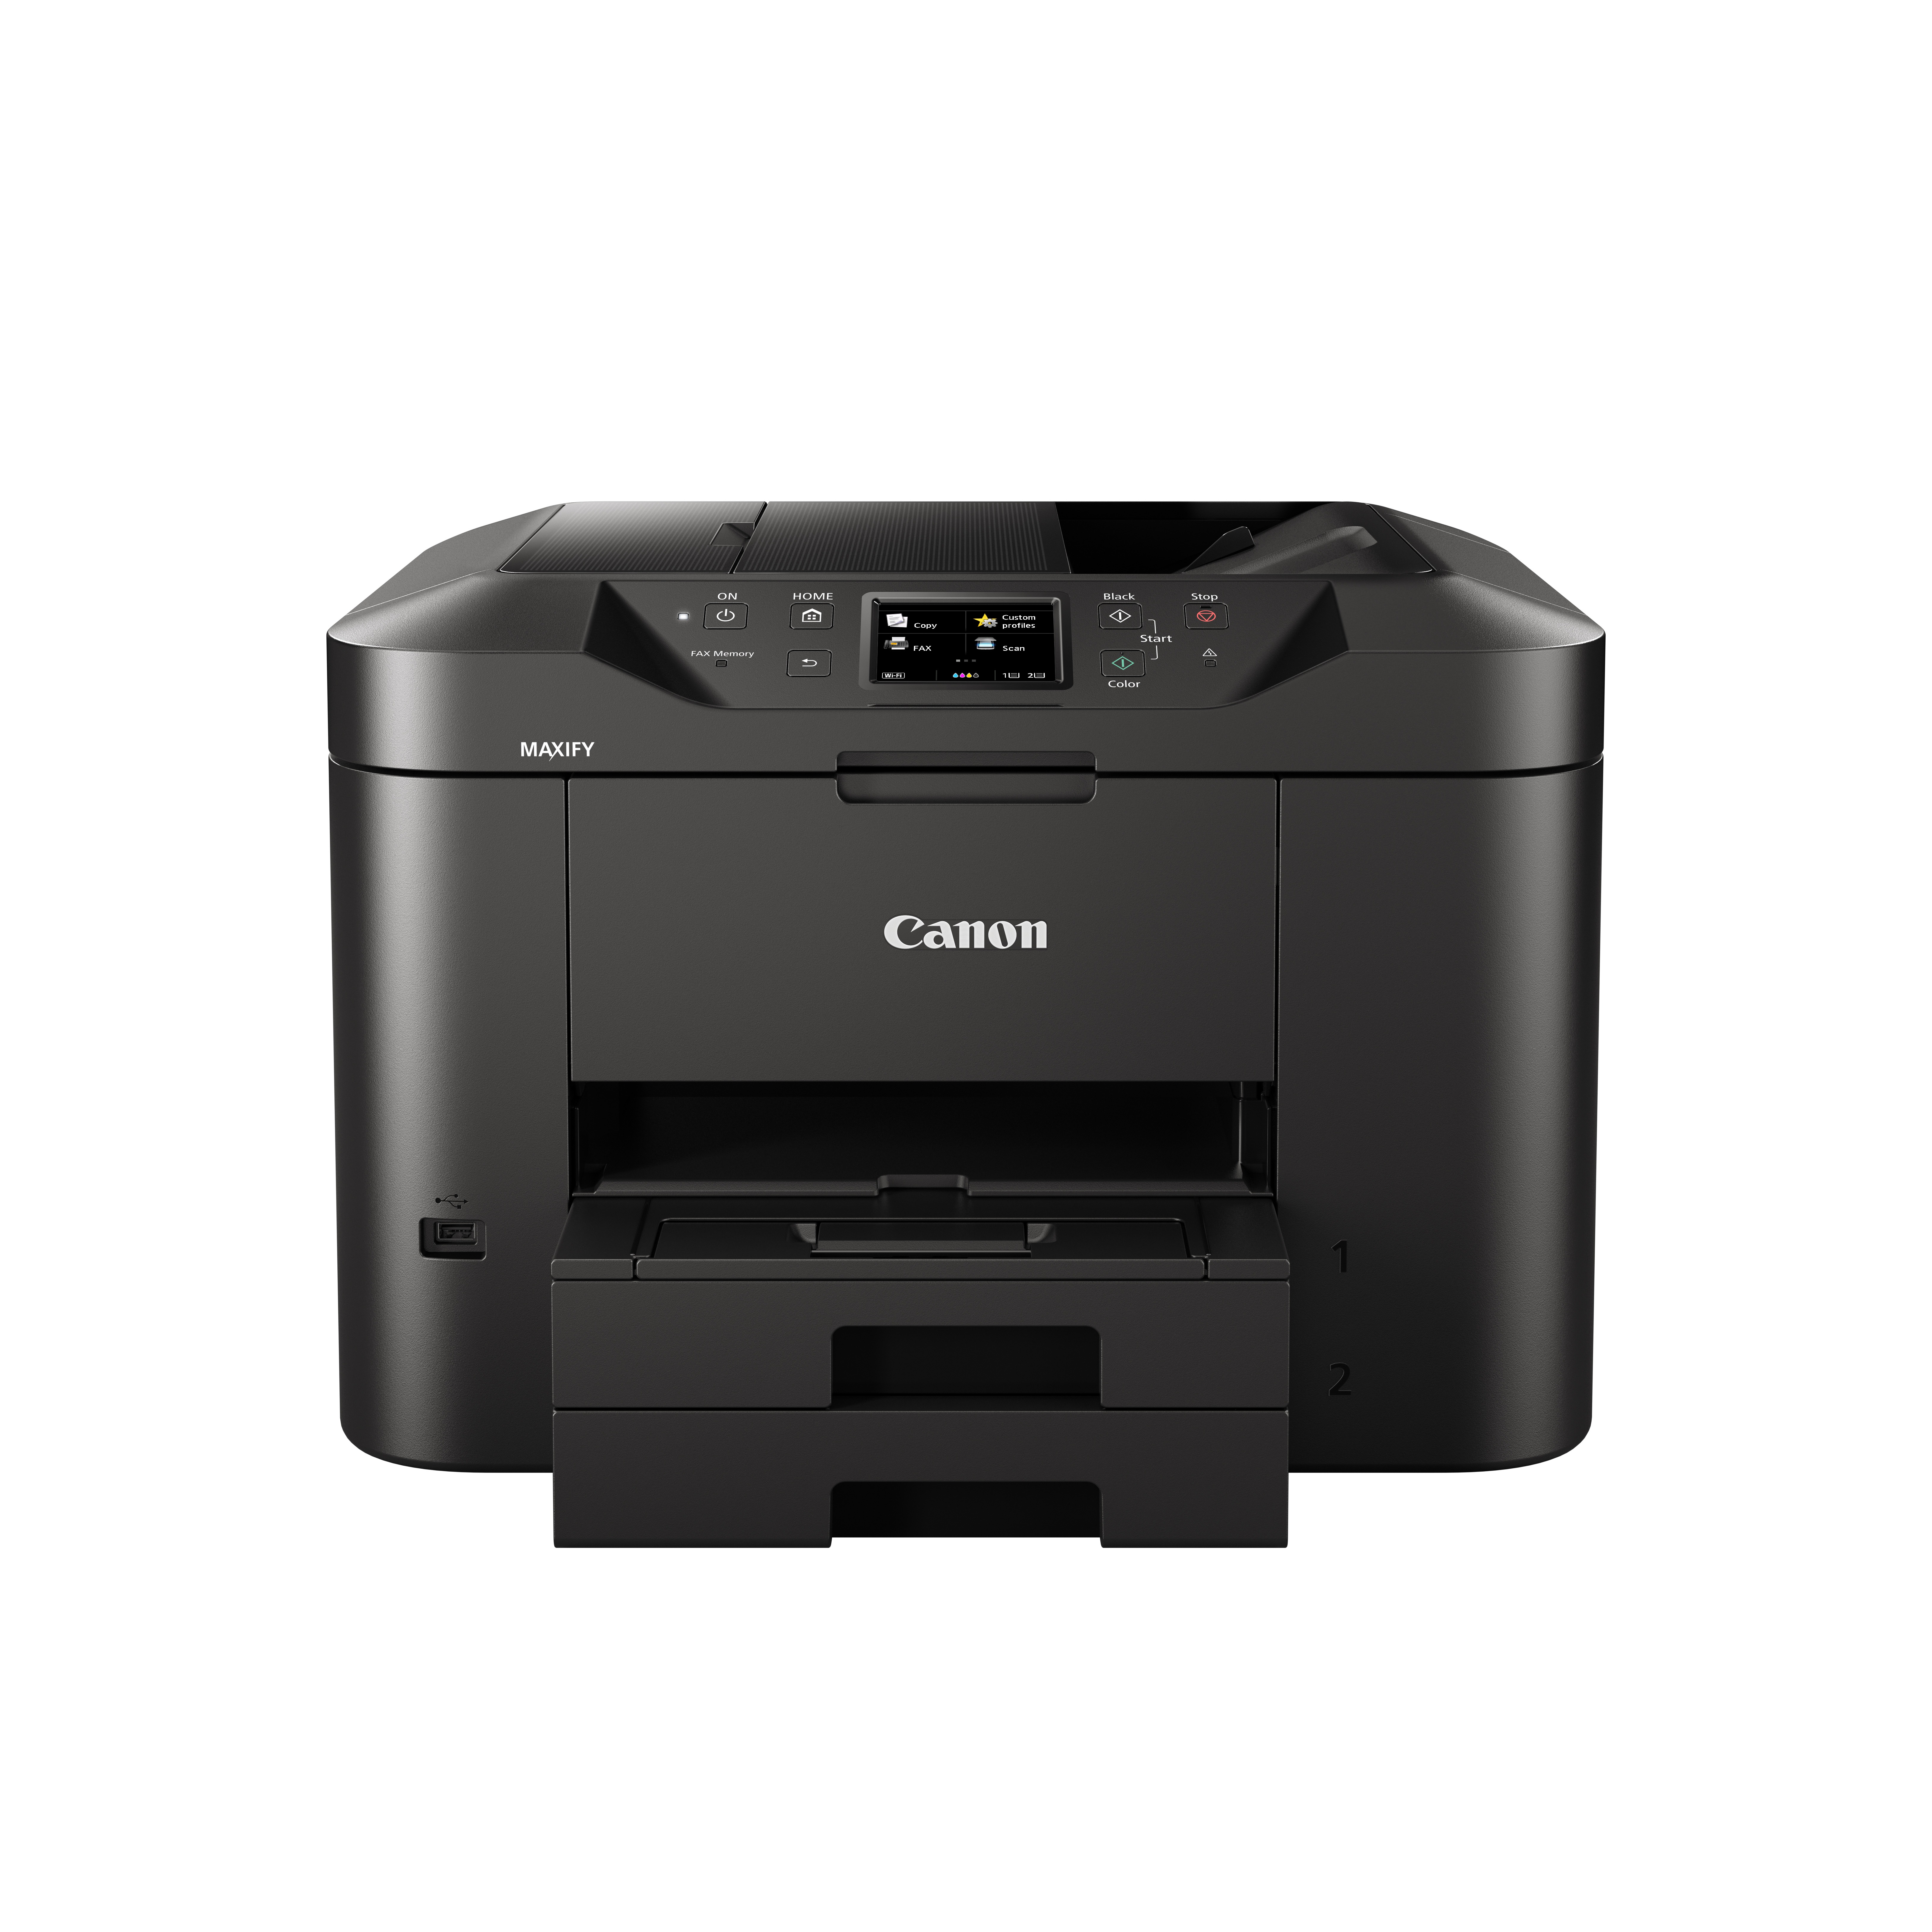 Canon Maxify Mb2750 impresora 600 1200dpi de tinta a4 24ppm wifi negro doble cara 600x1200ppp 24ipm